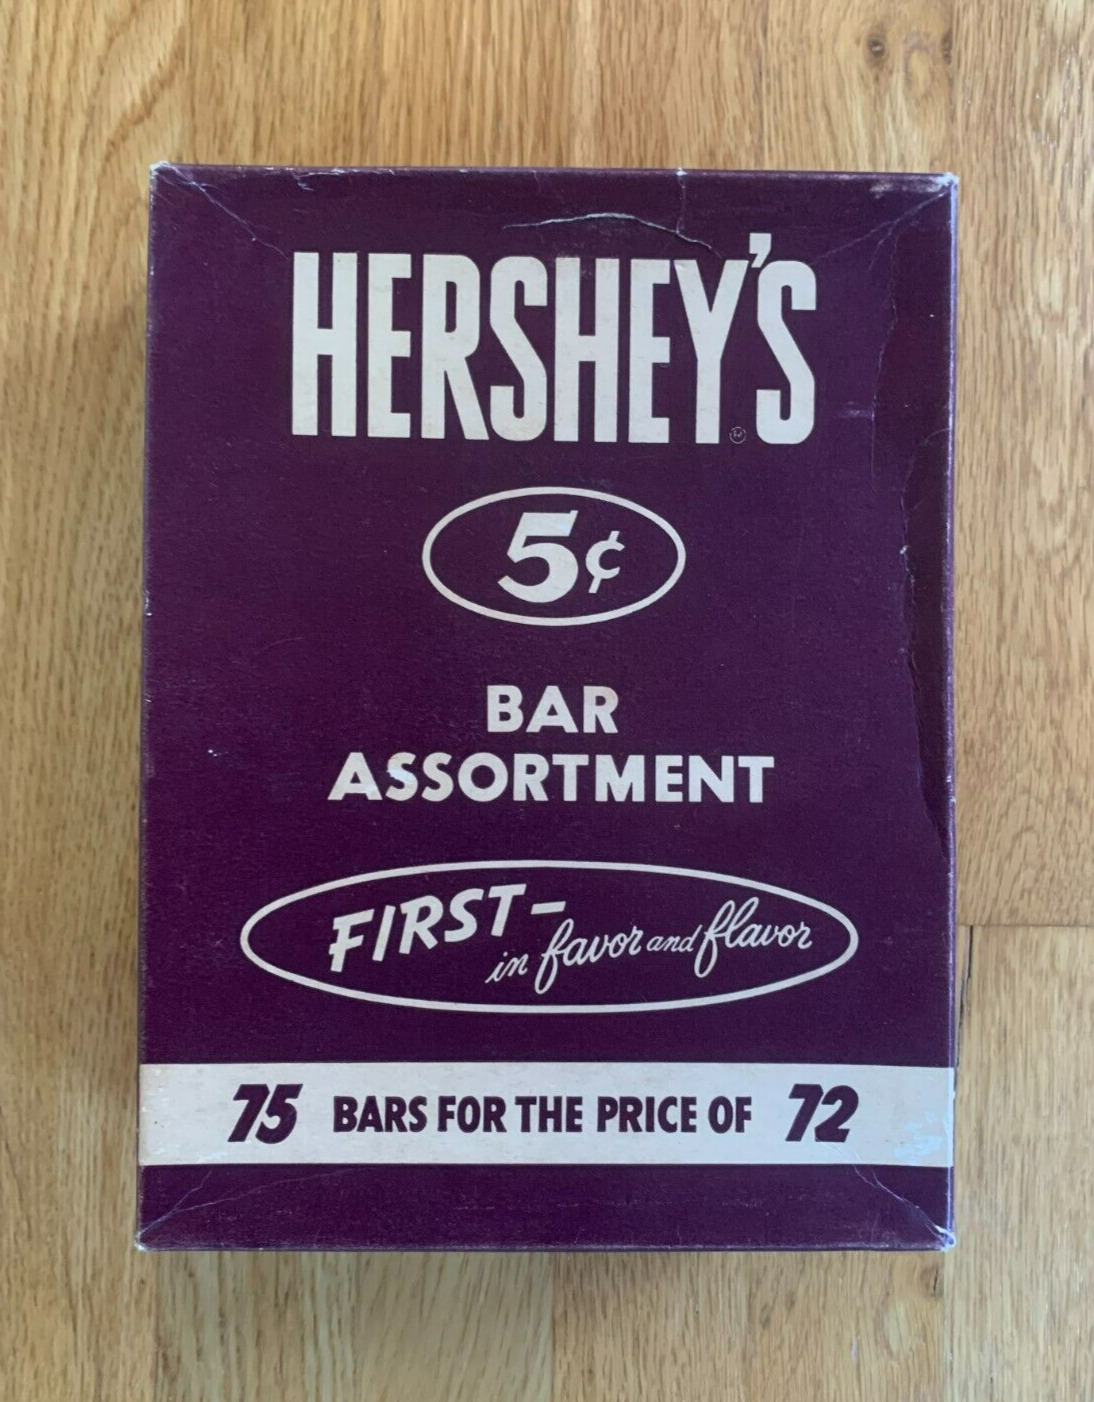 Vintage Empty Hershey's Chocolate Candy Assortment Box, Item No 204, 75 Bars